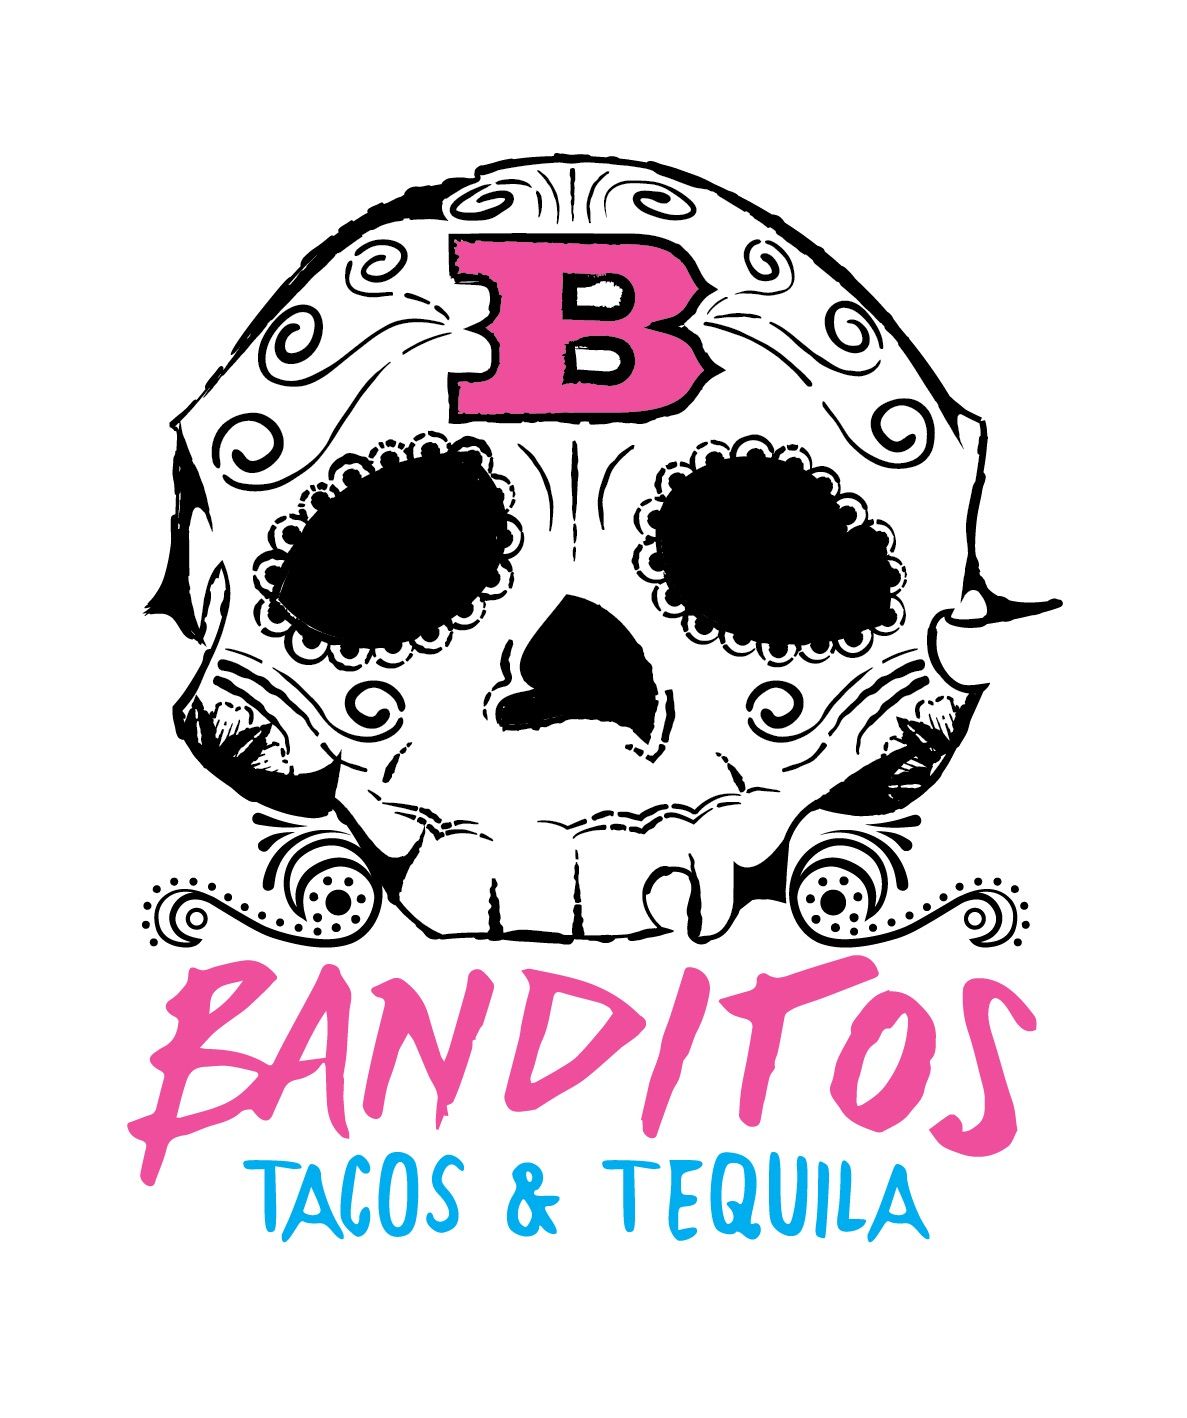 DRINK NOVA Meetup #37 - Banditos Tacos & Tequila - Fairfax